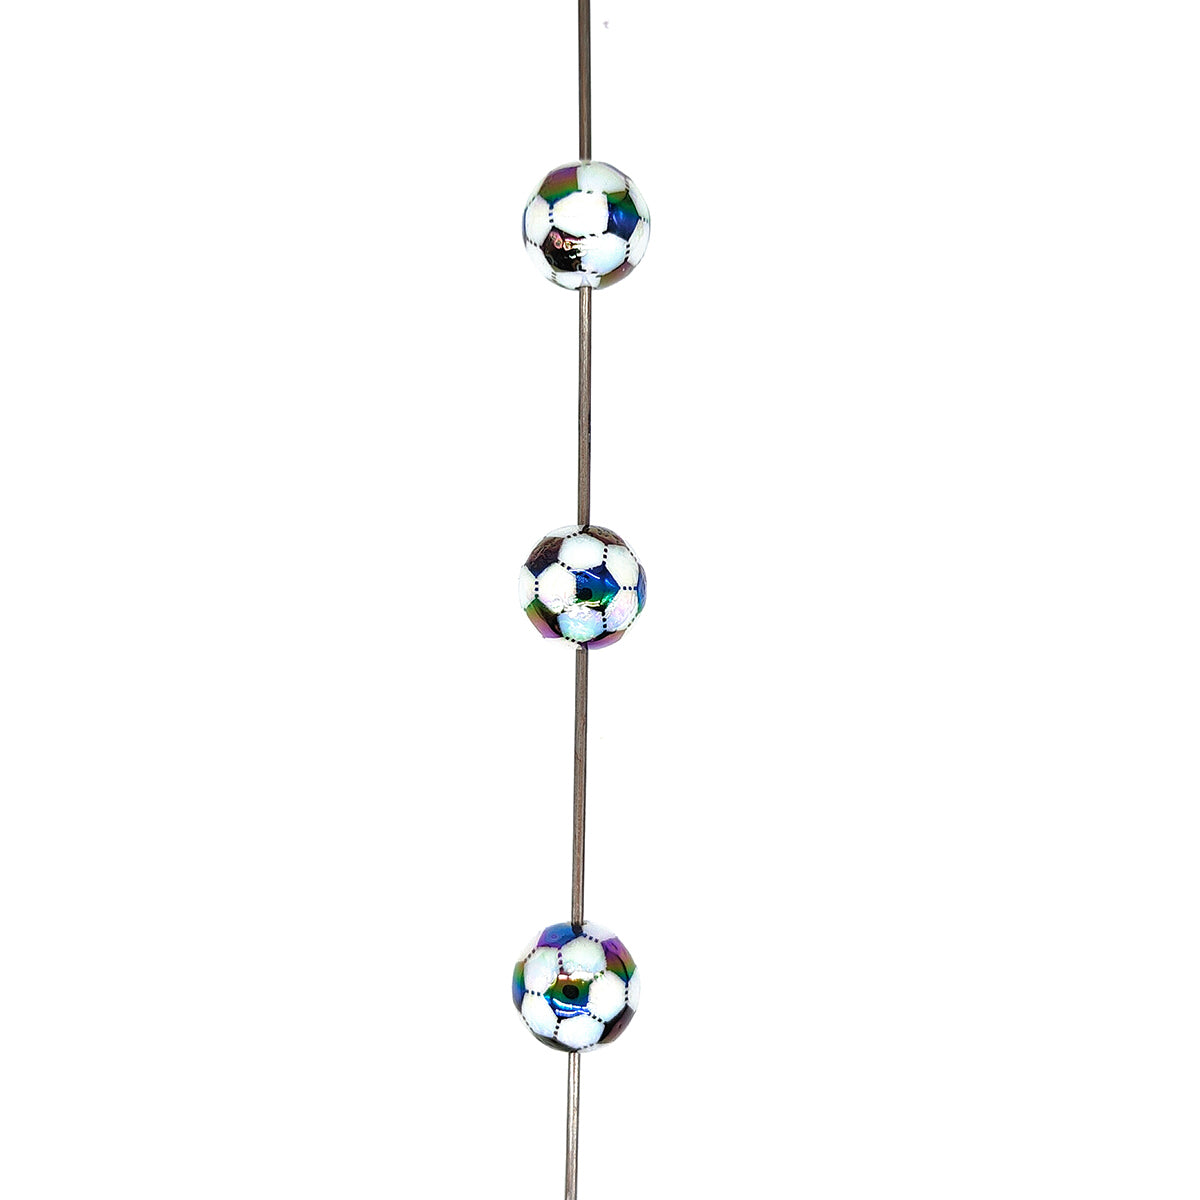 16mm Soccer Sport Gumball Beads, Acrylic Beads